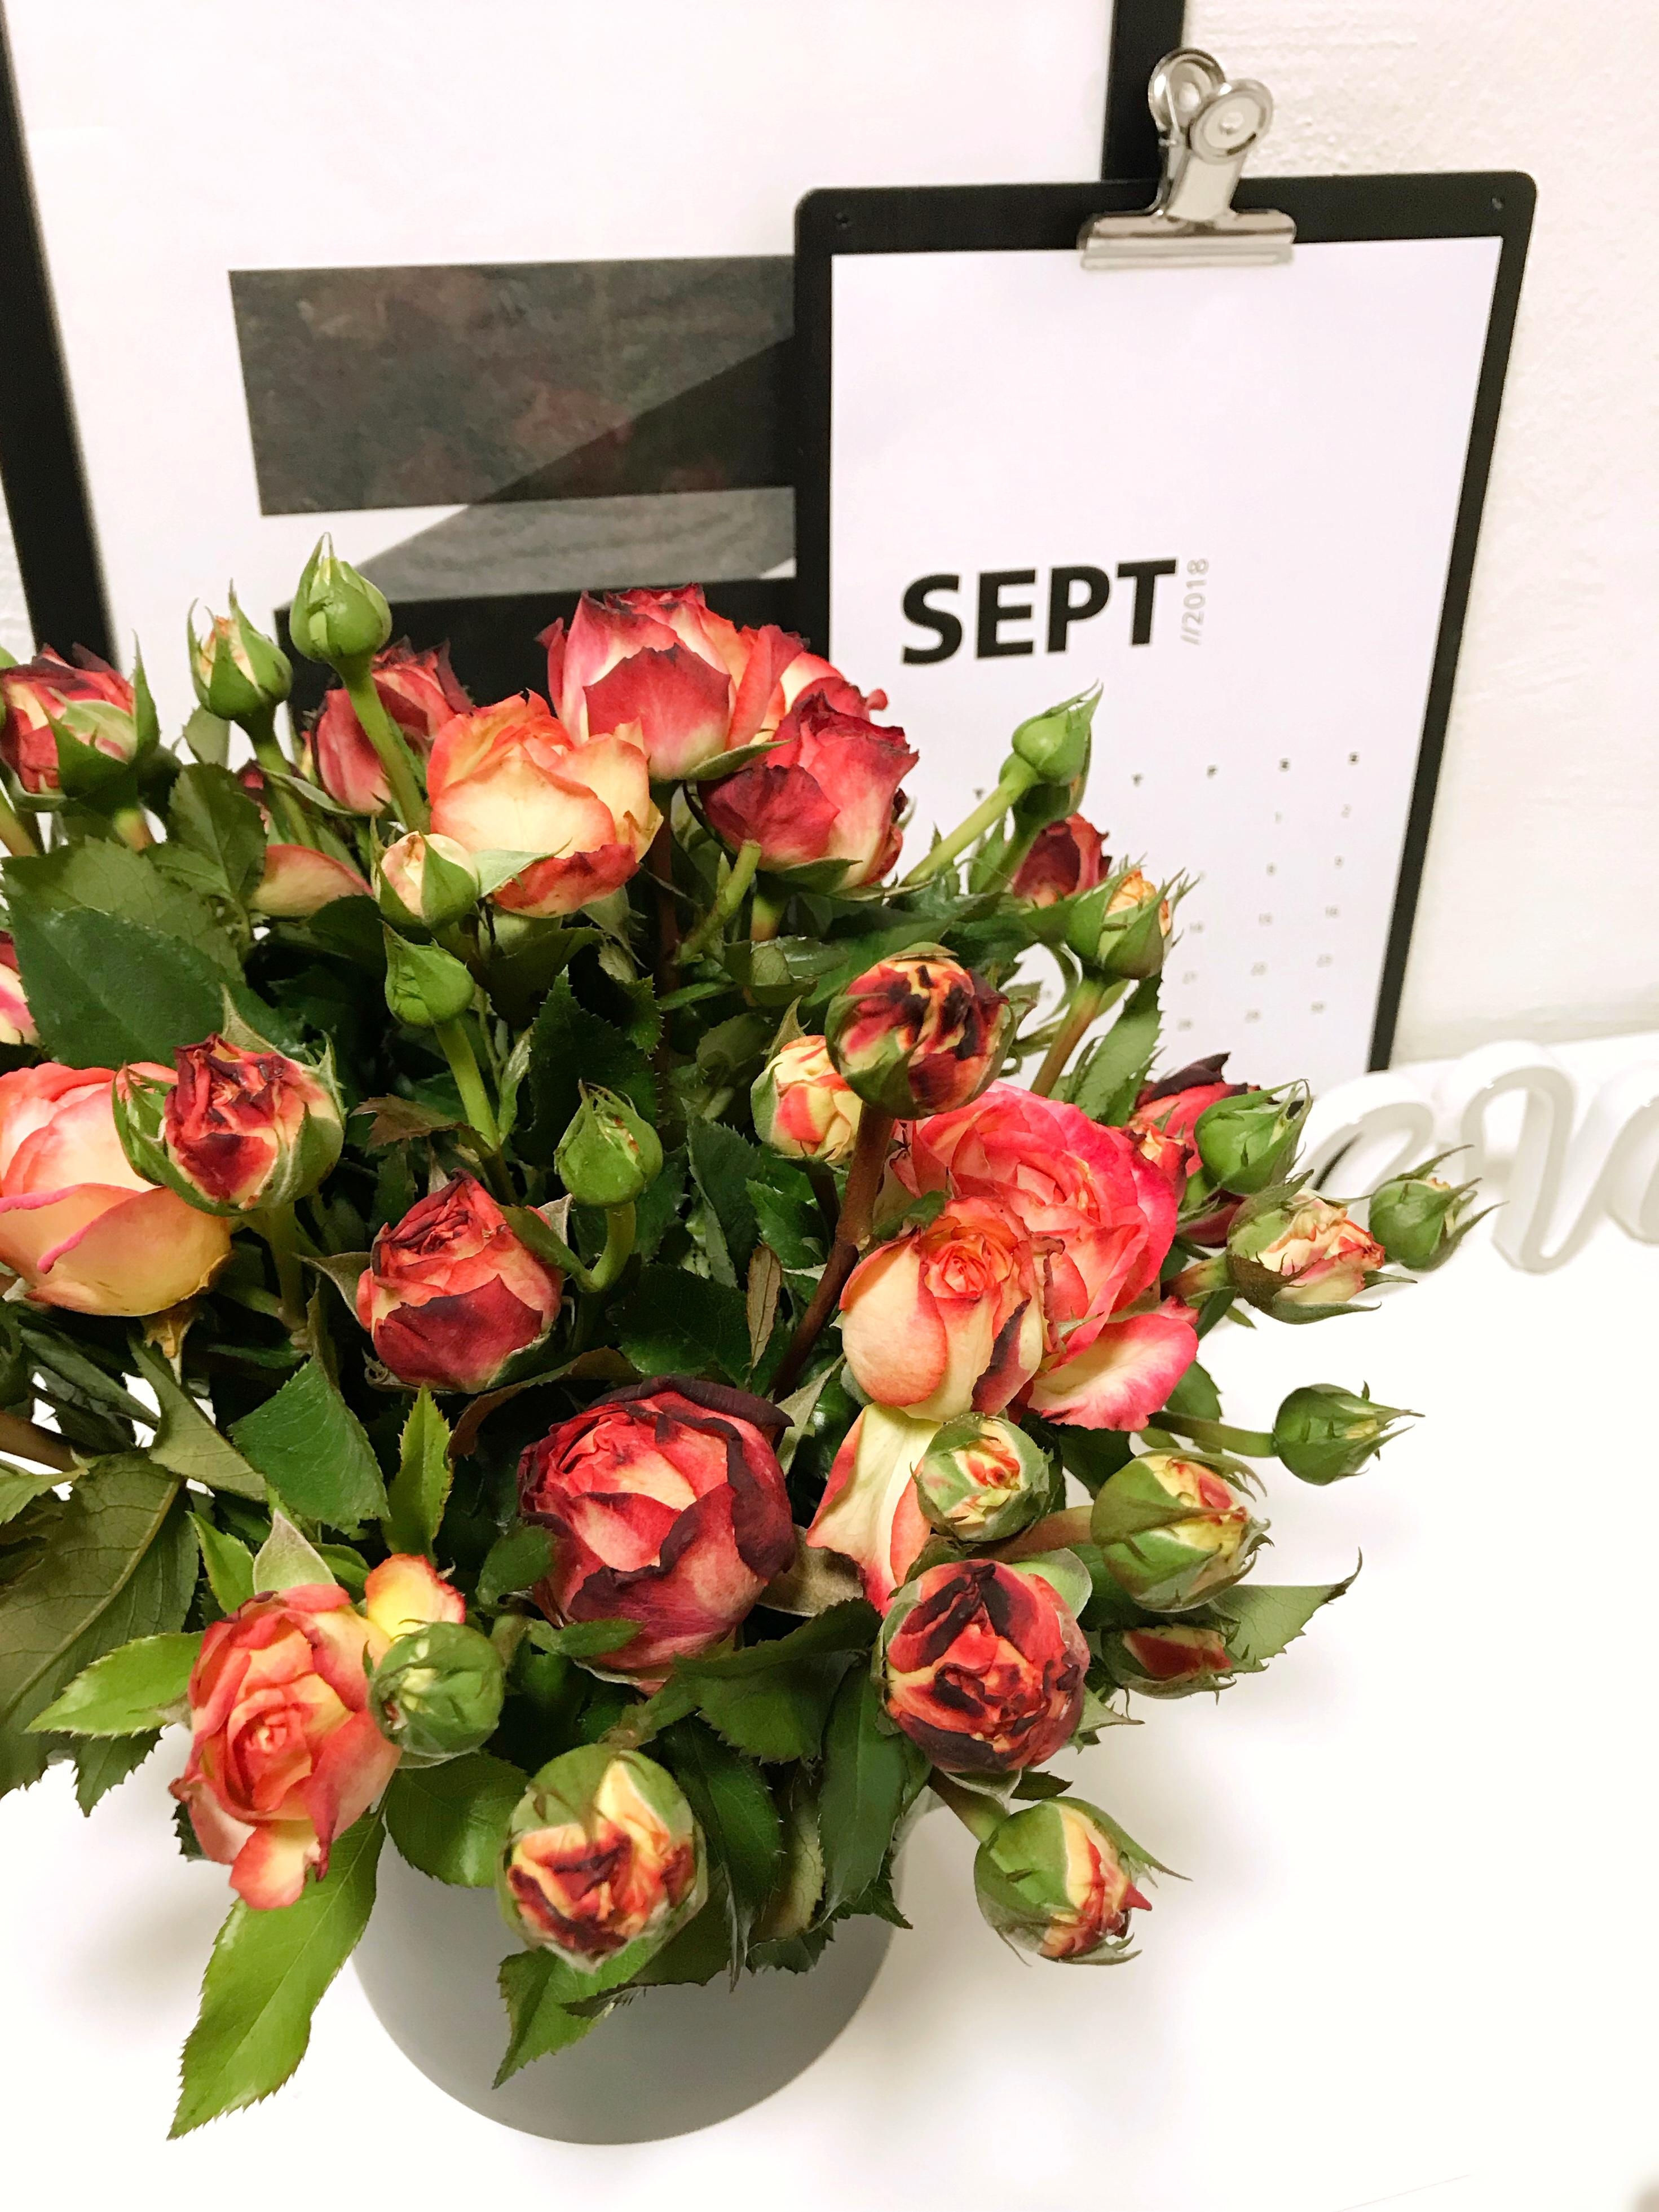 Septemberblümchen geschenkt bekommen 😍 #rosen #vase #blackandwhite #flur #deko #kalender #september #herbst #blumen 